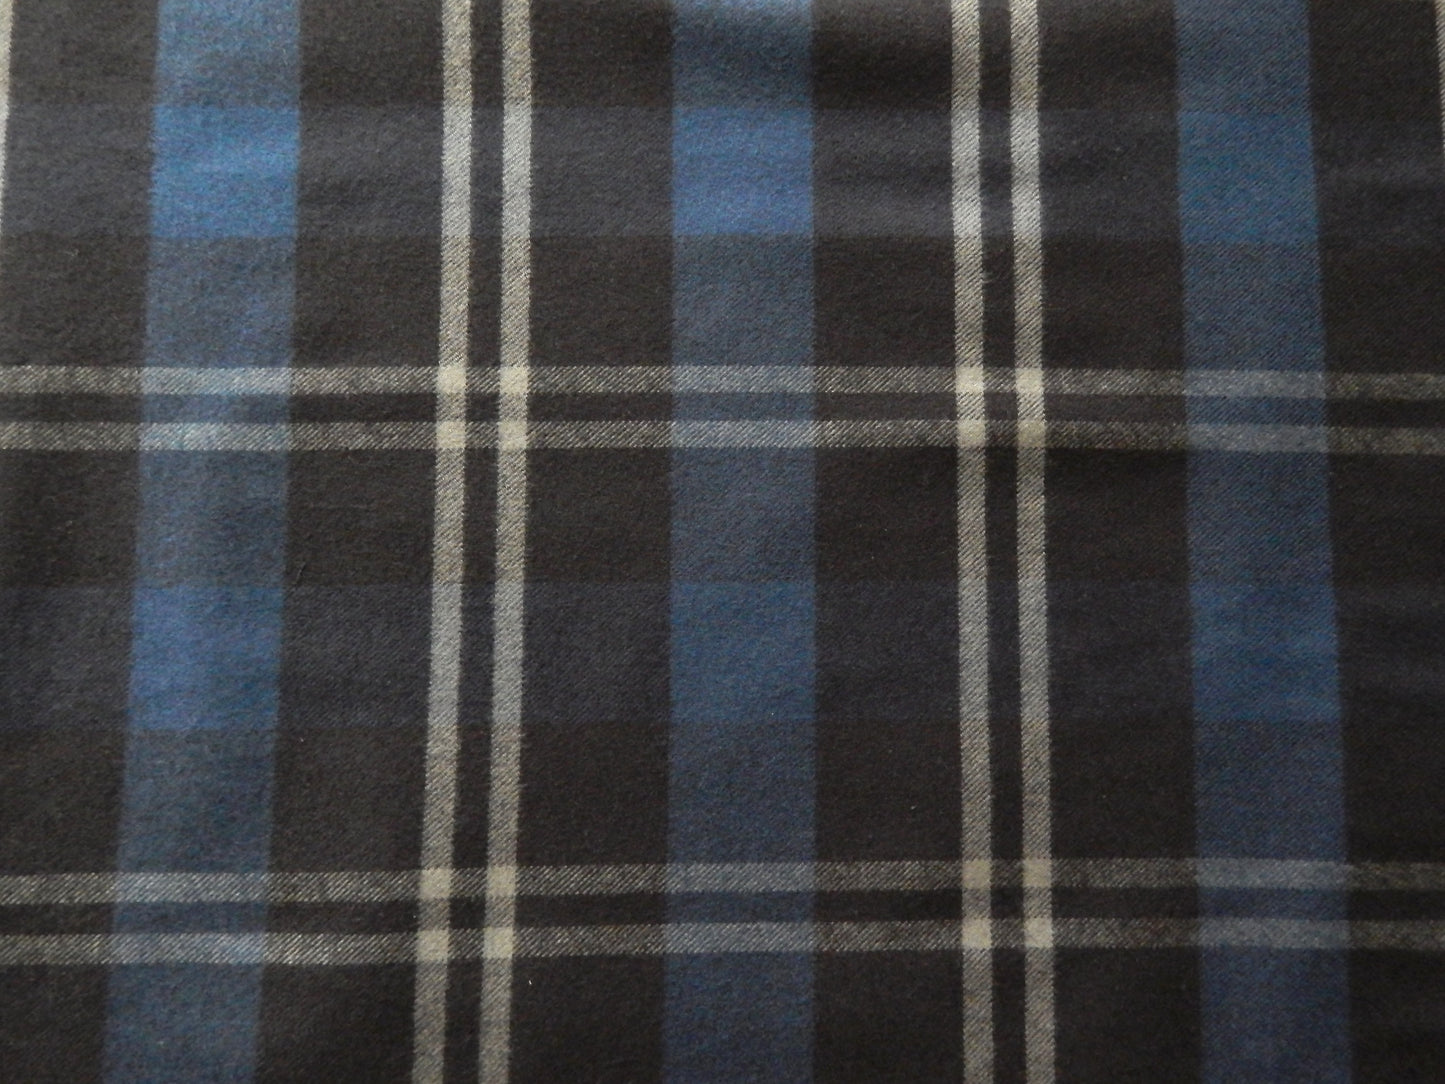 Black, grey, and blue plaid fabric